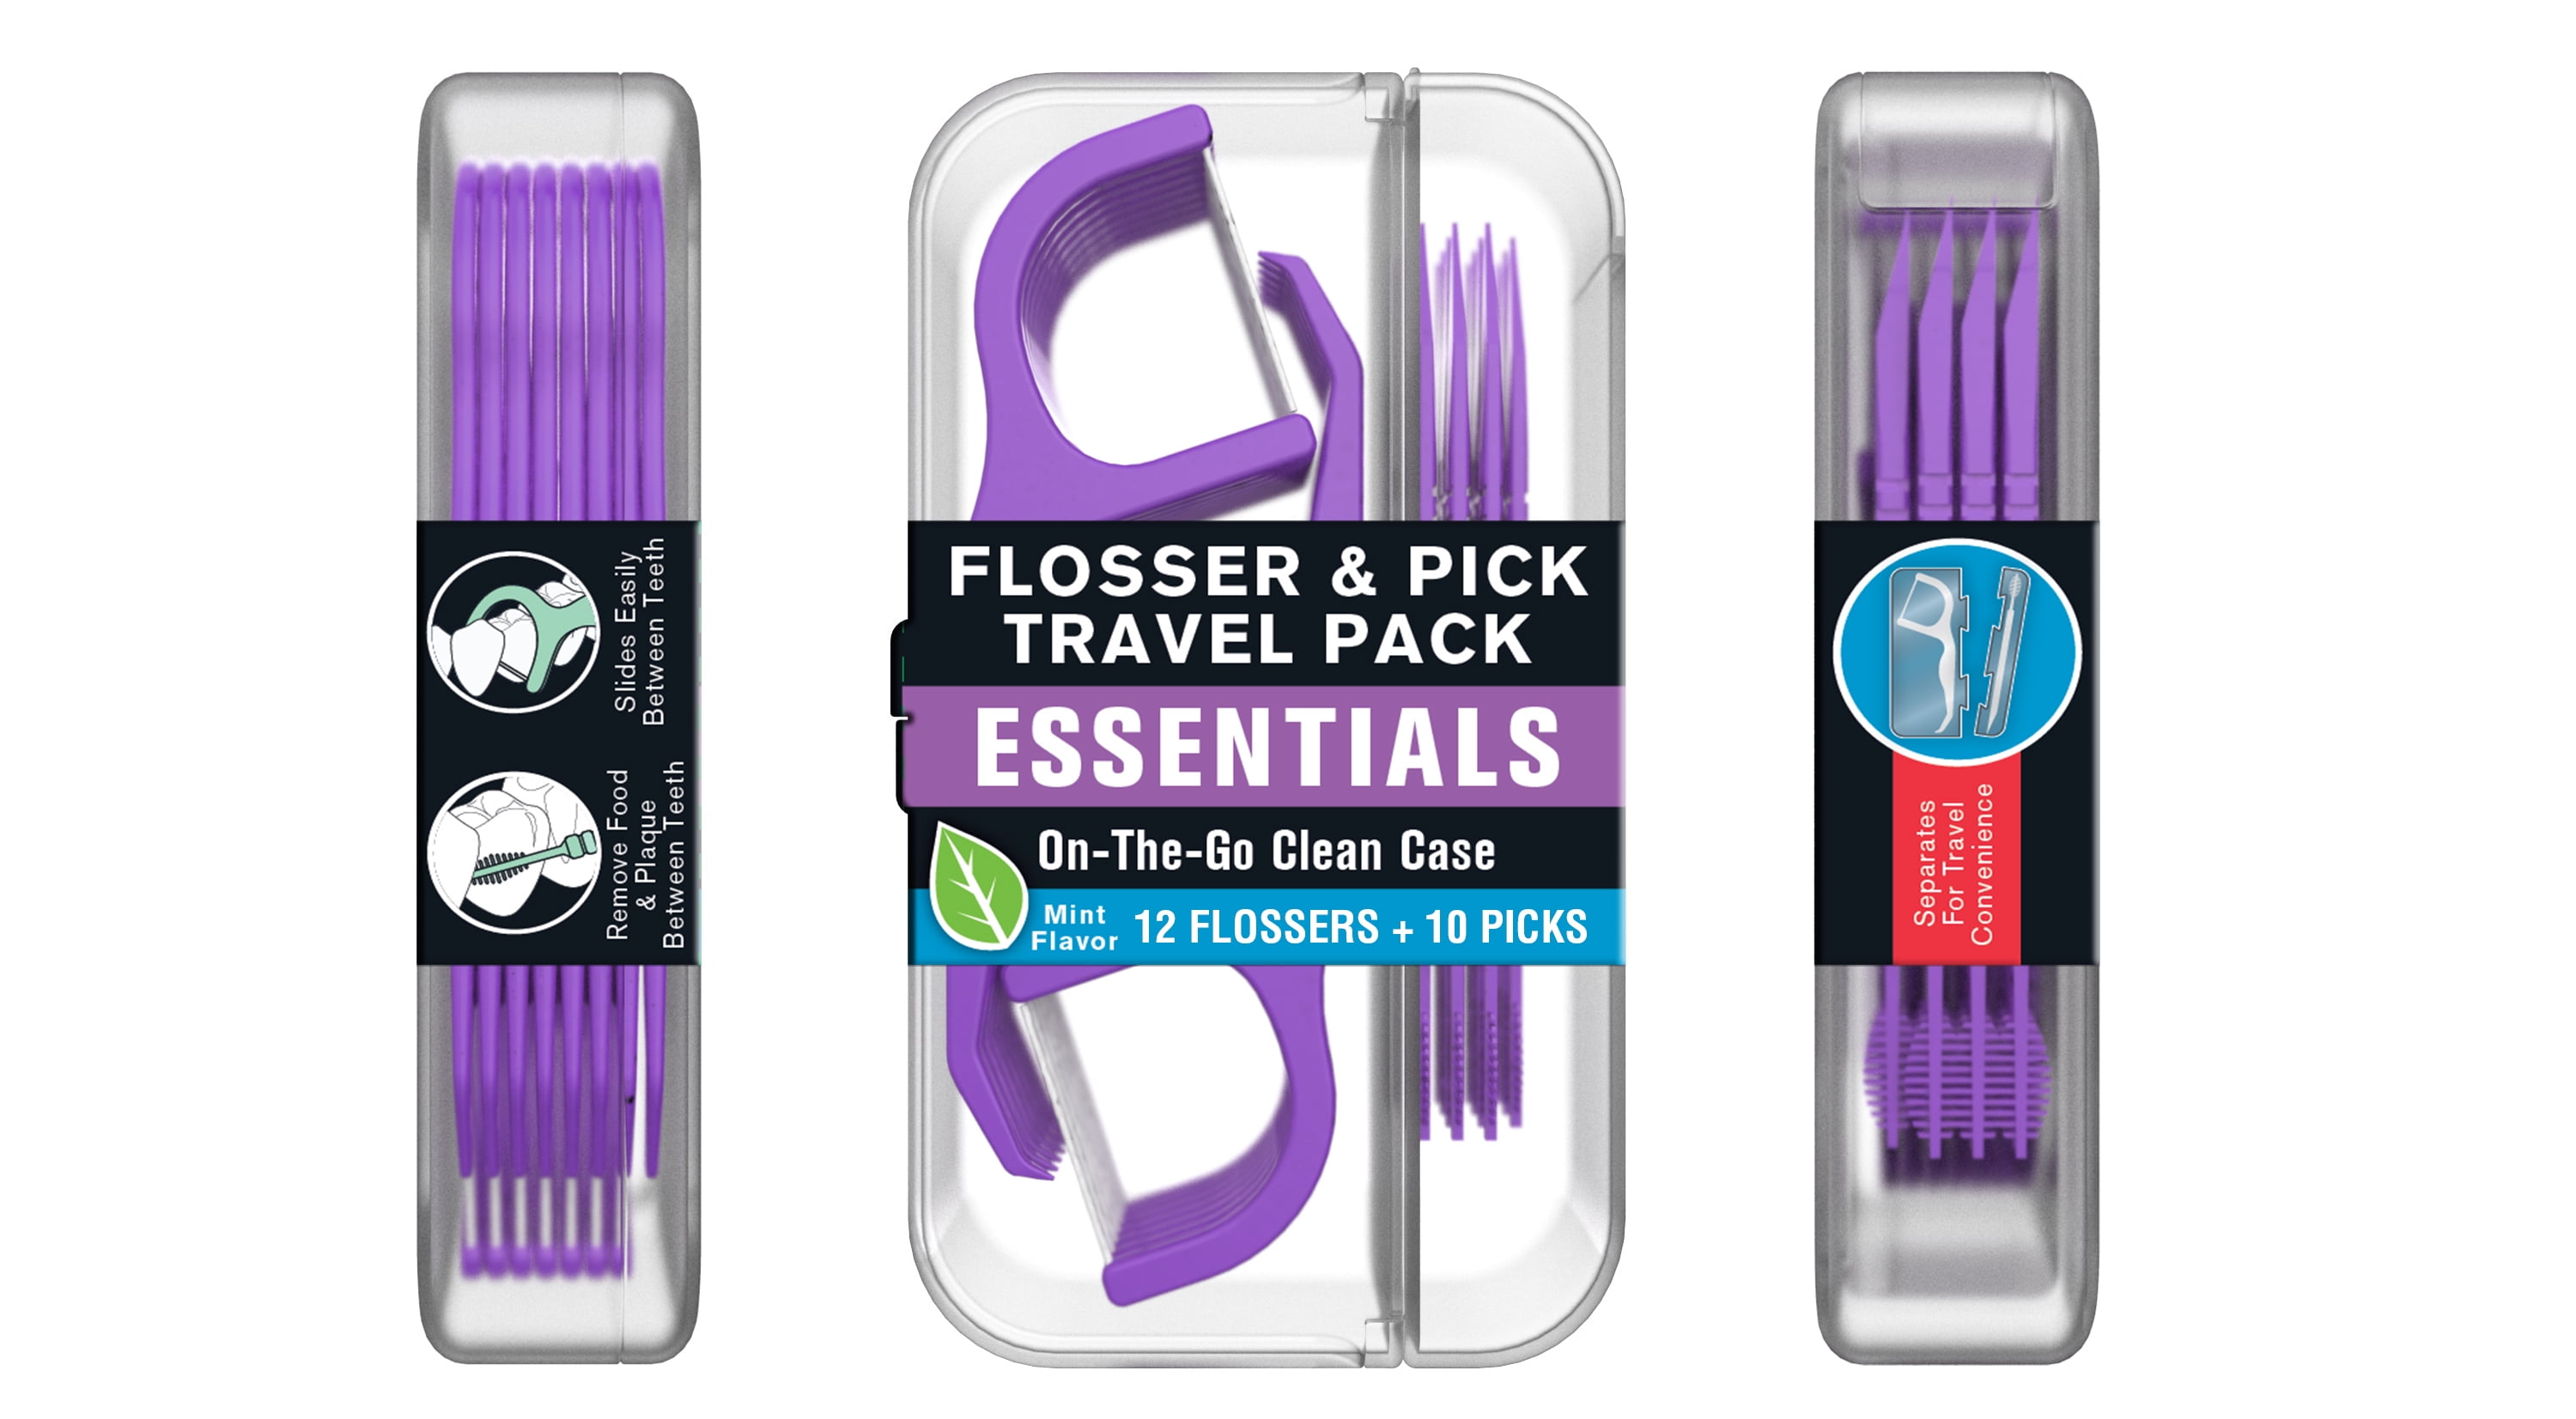 Reach Essentials Flosser & Pick Travel Pack, 22 Pieces